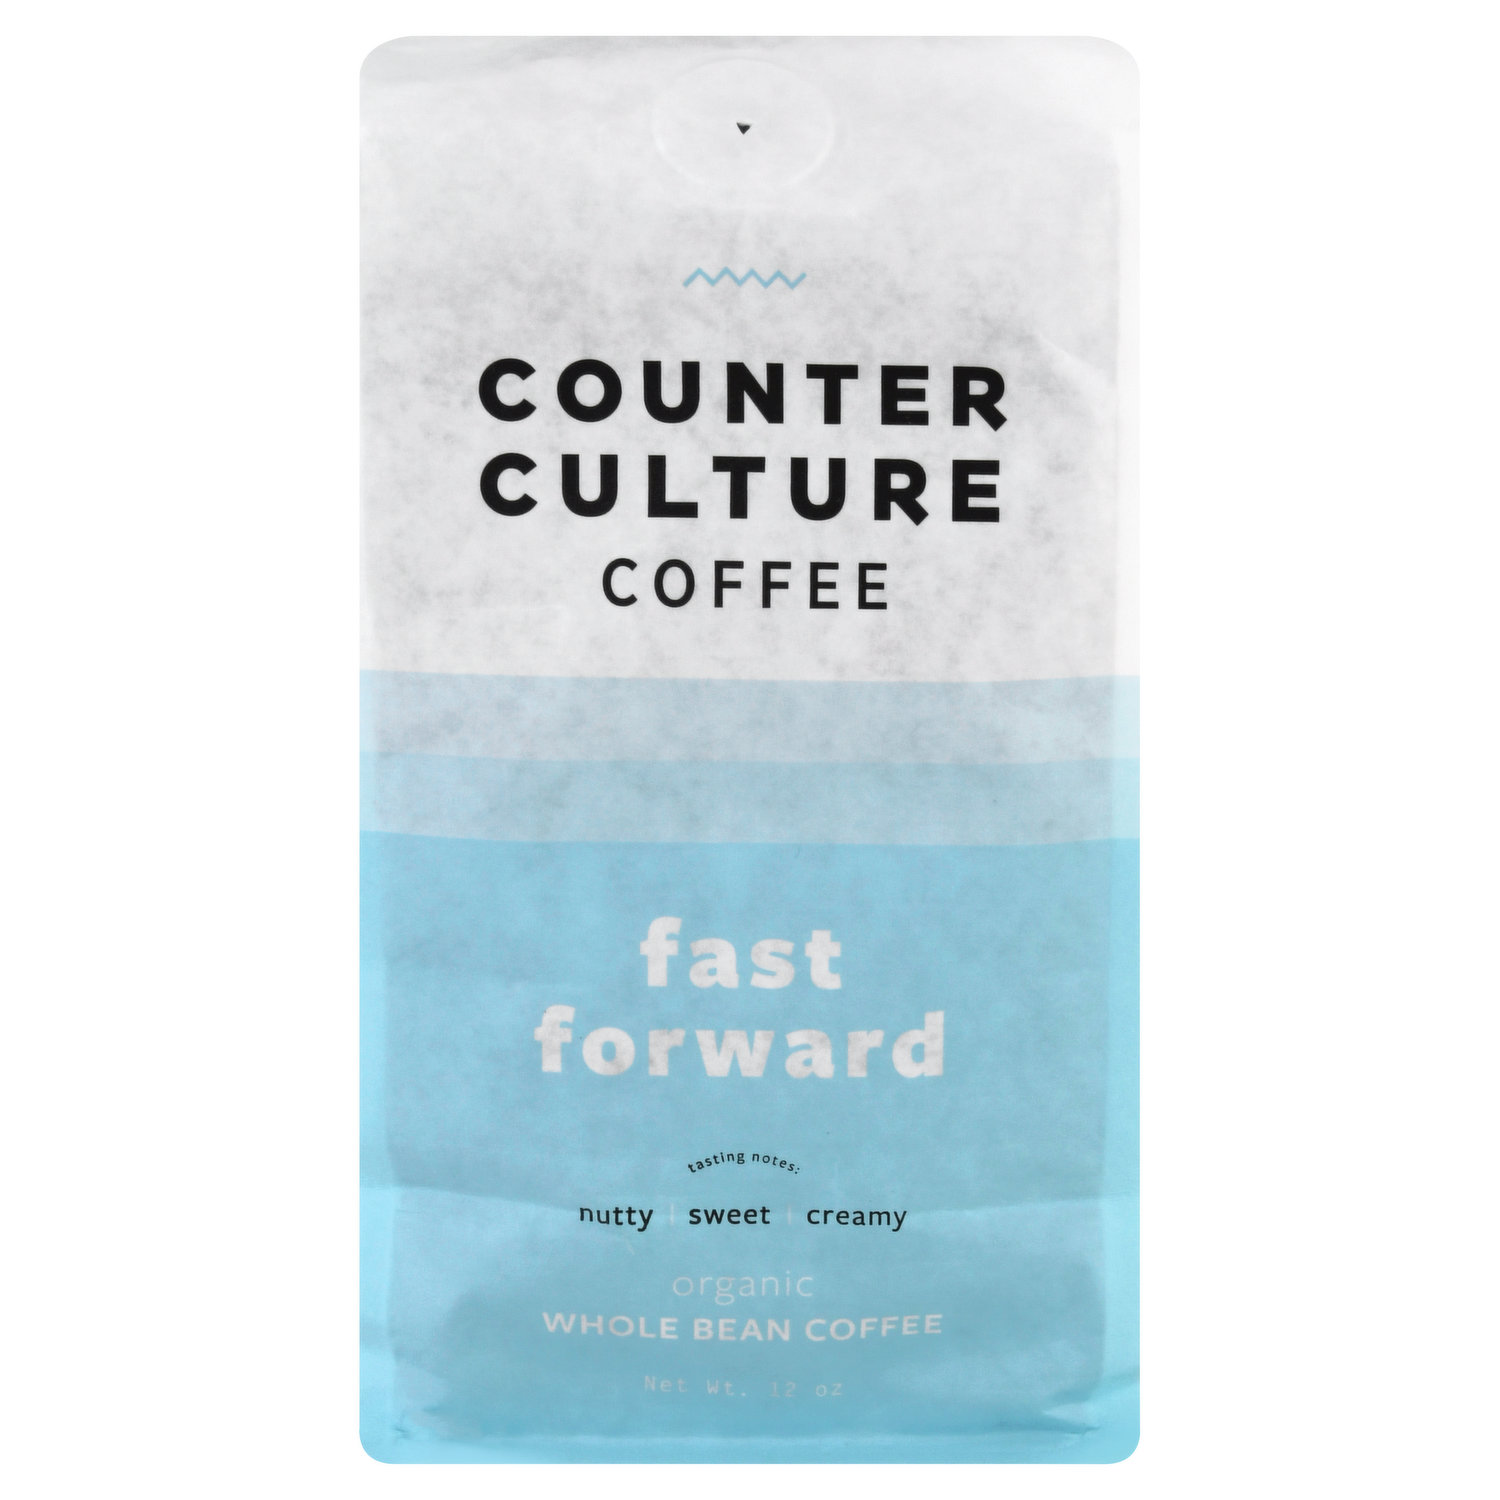 Counter Culture Coffee